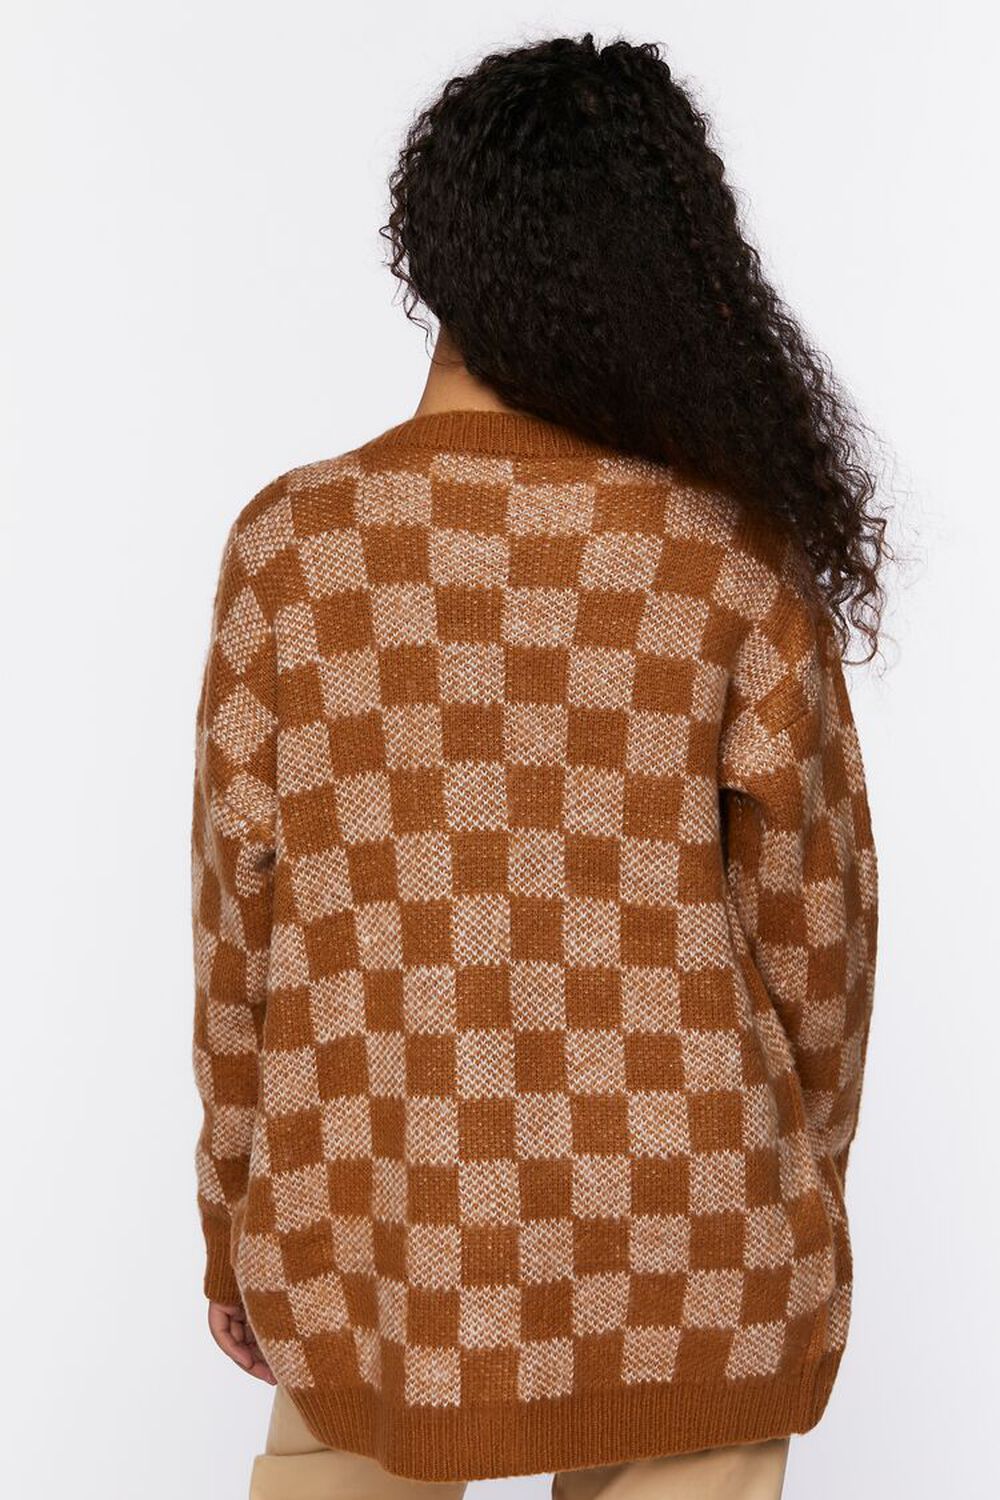 BROWN/MULTI Checkered Cardigan Sweater, image 3